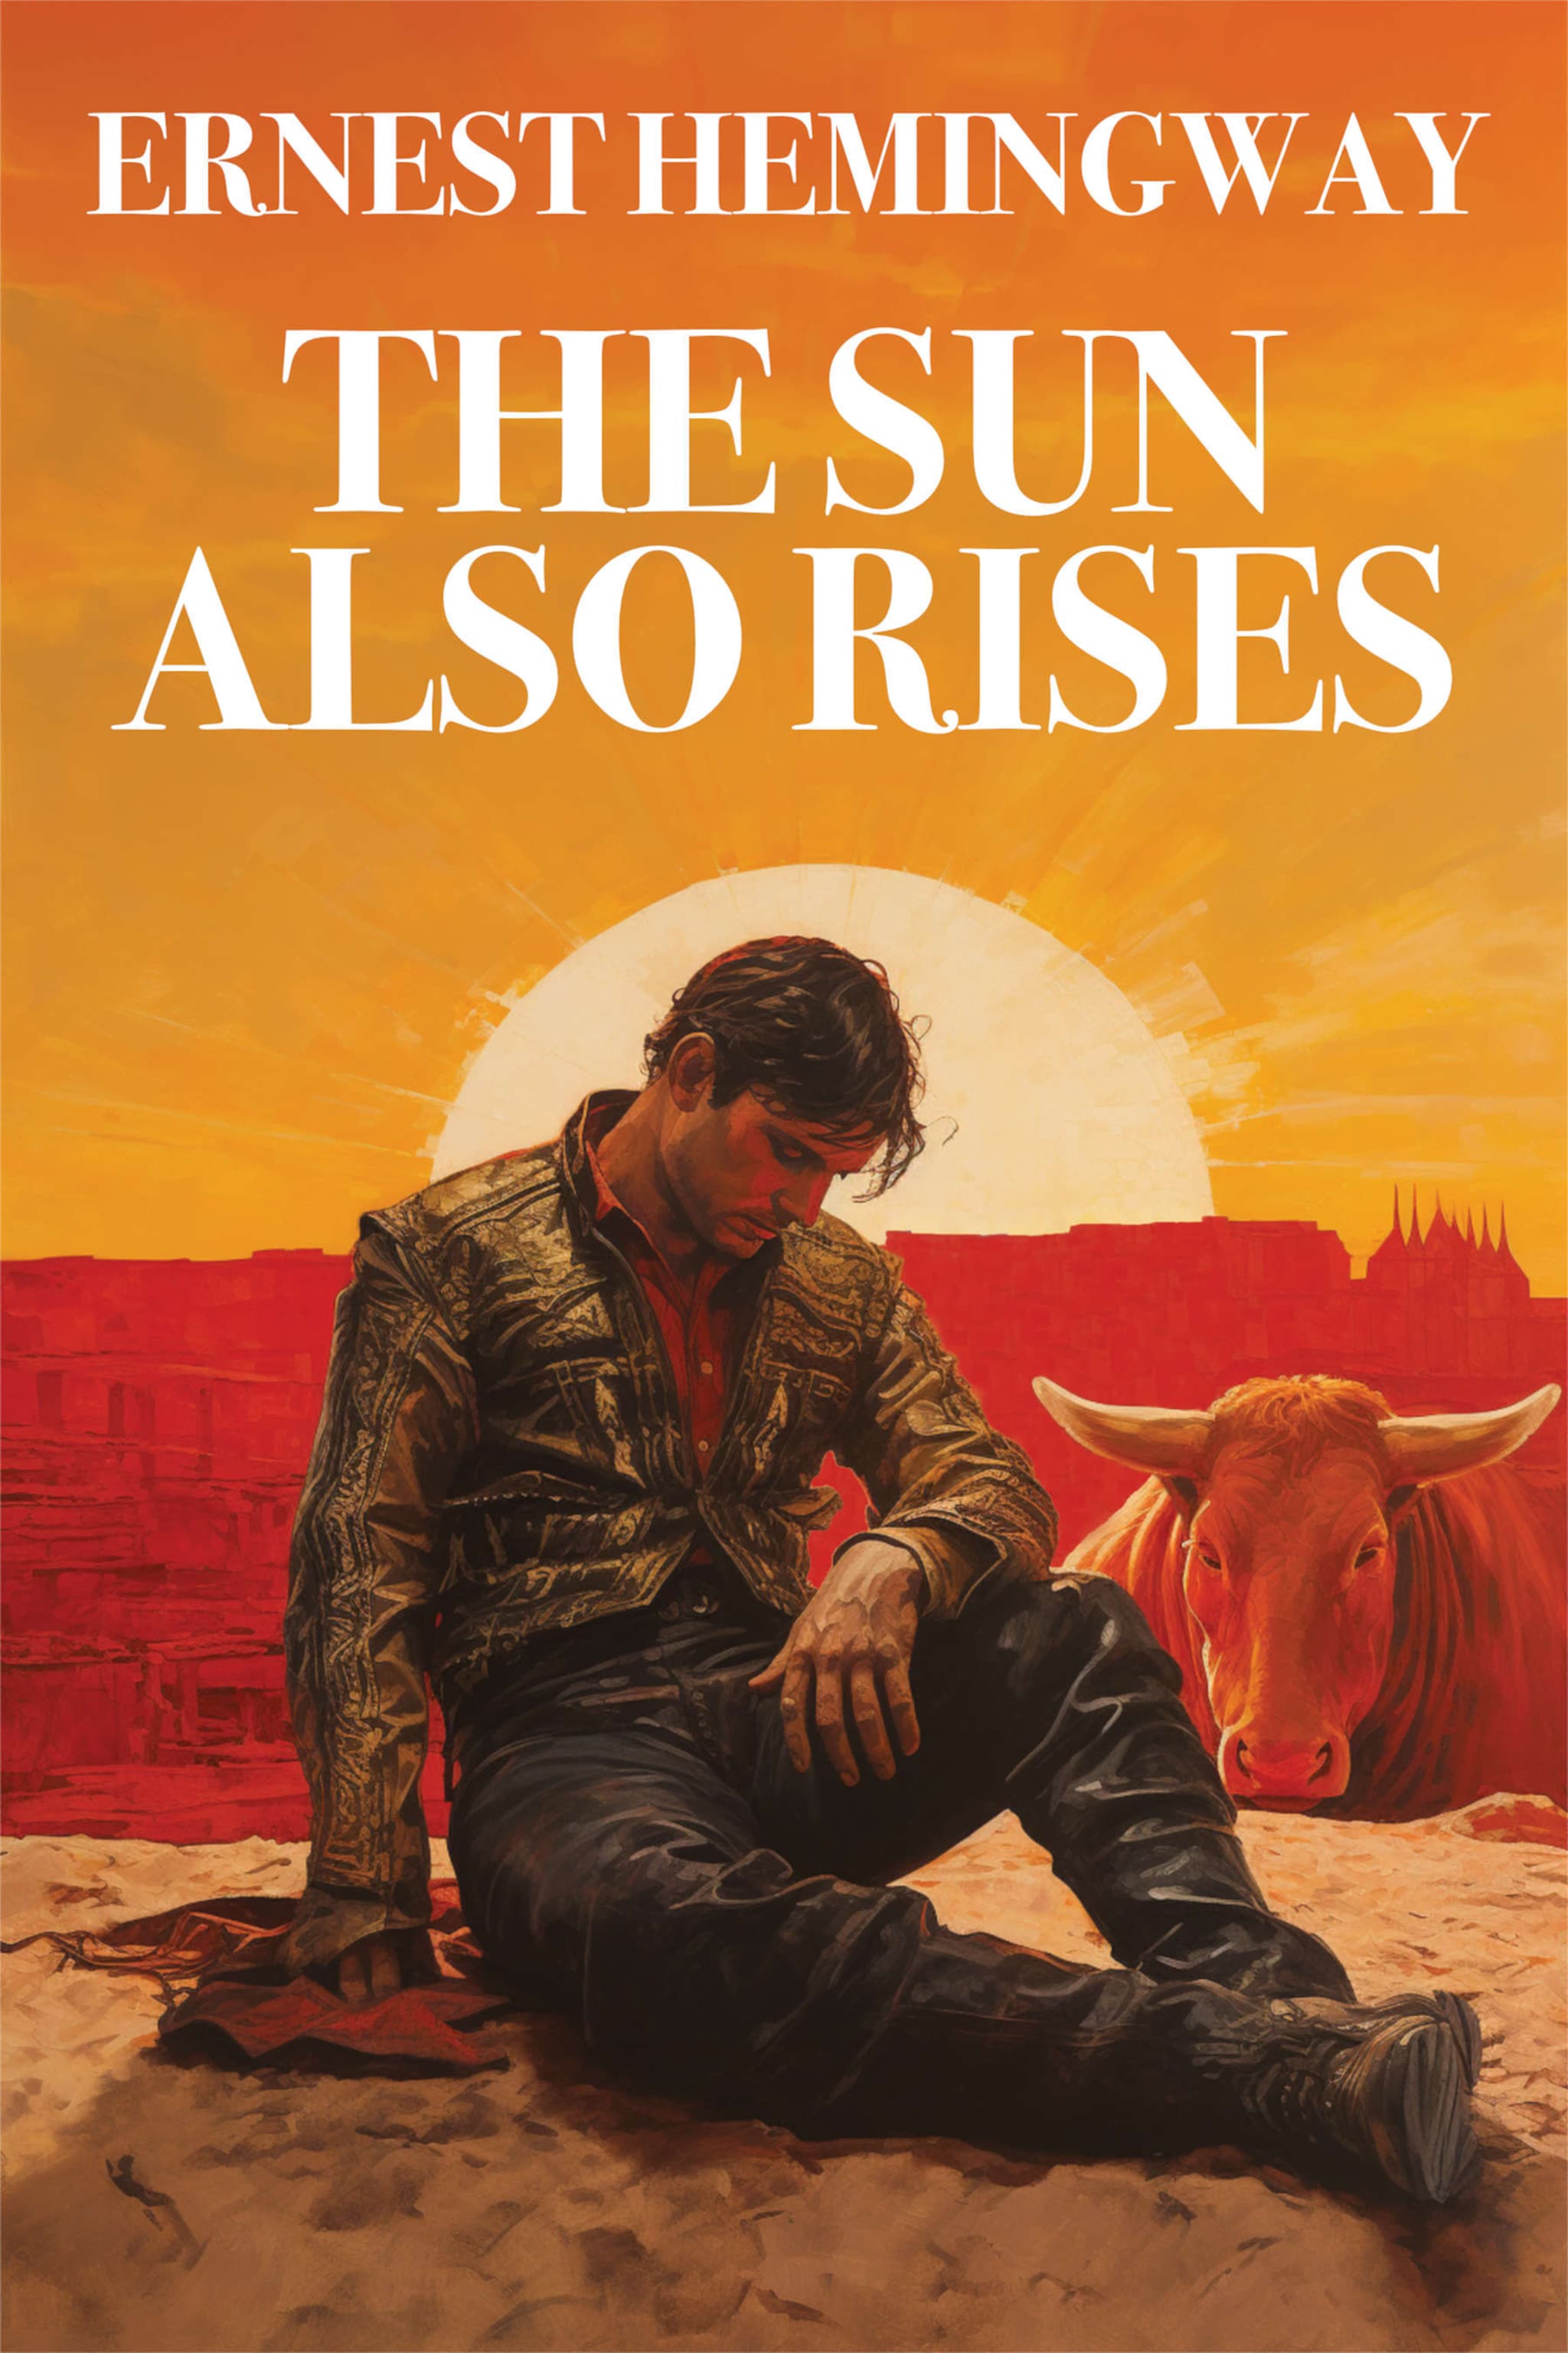 The Sun Also Rises - Ernest Hemingway - E-book - BookBeat